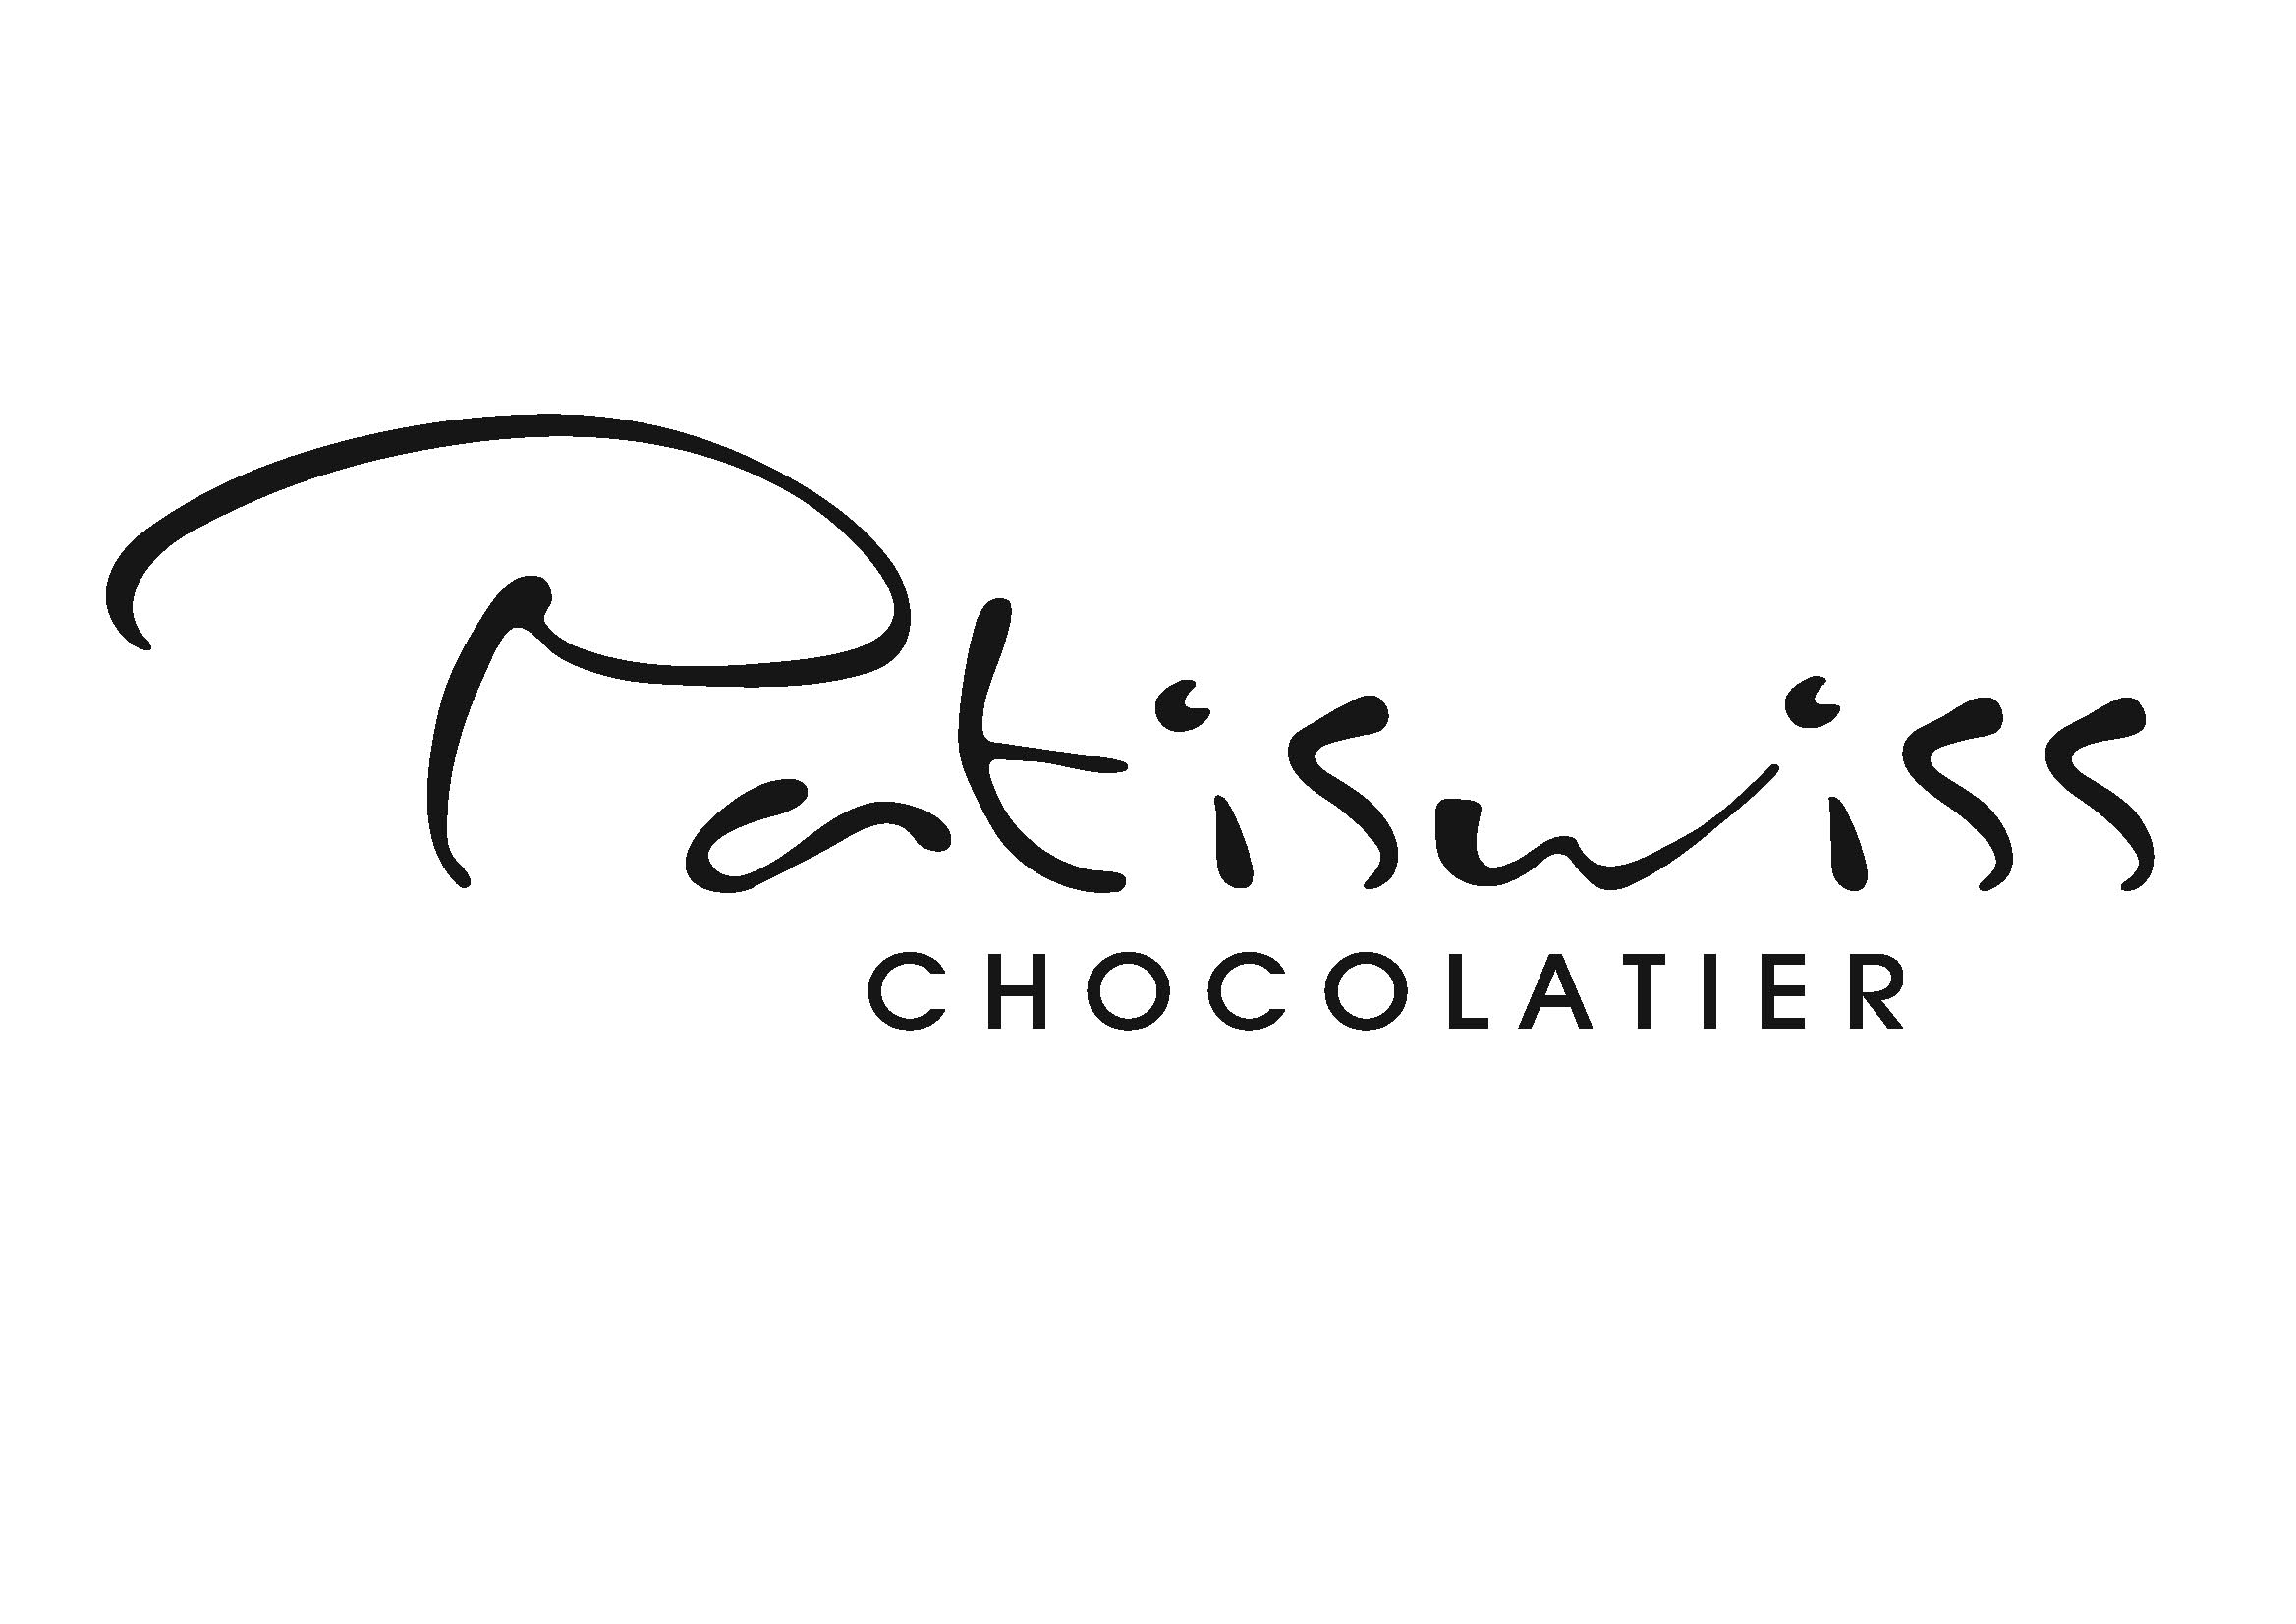 Pentiwiss Chocolatier